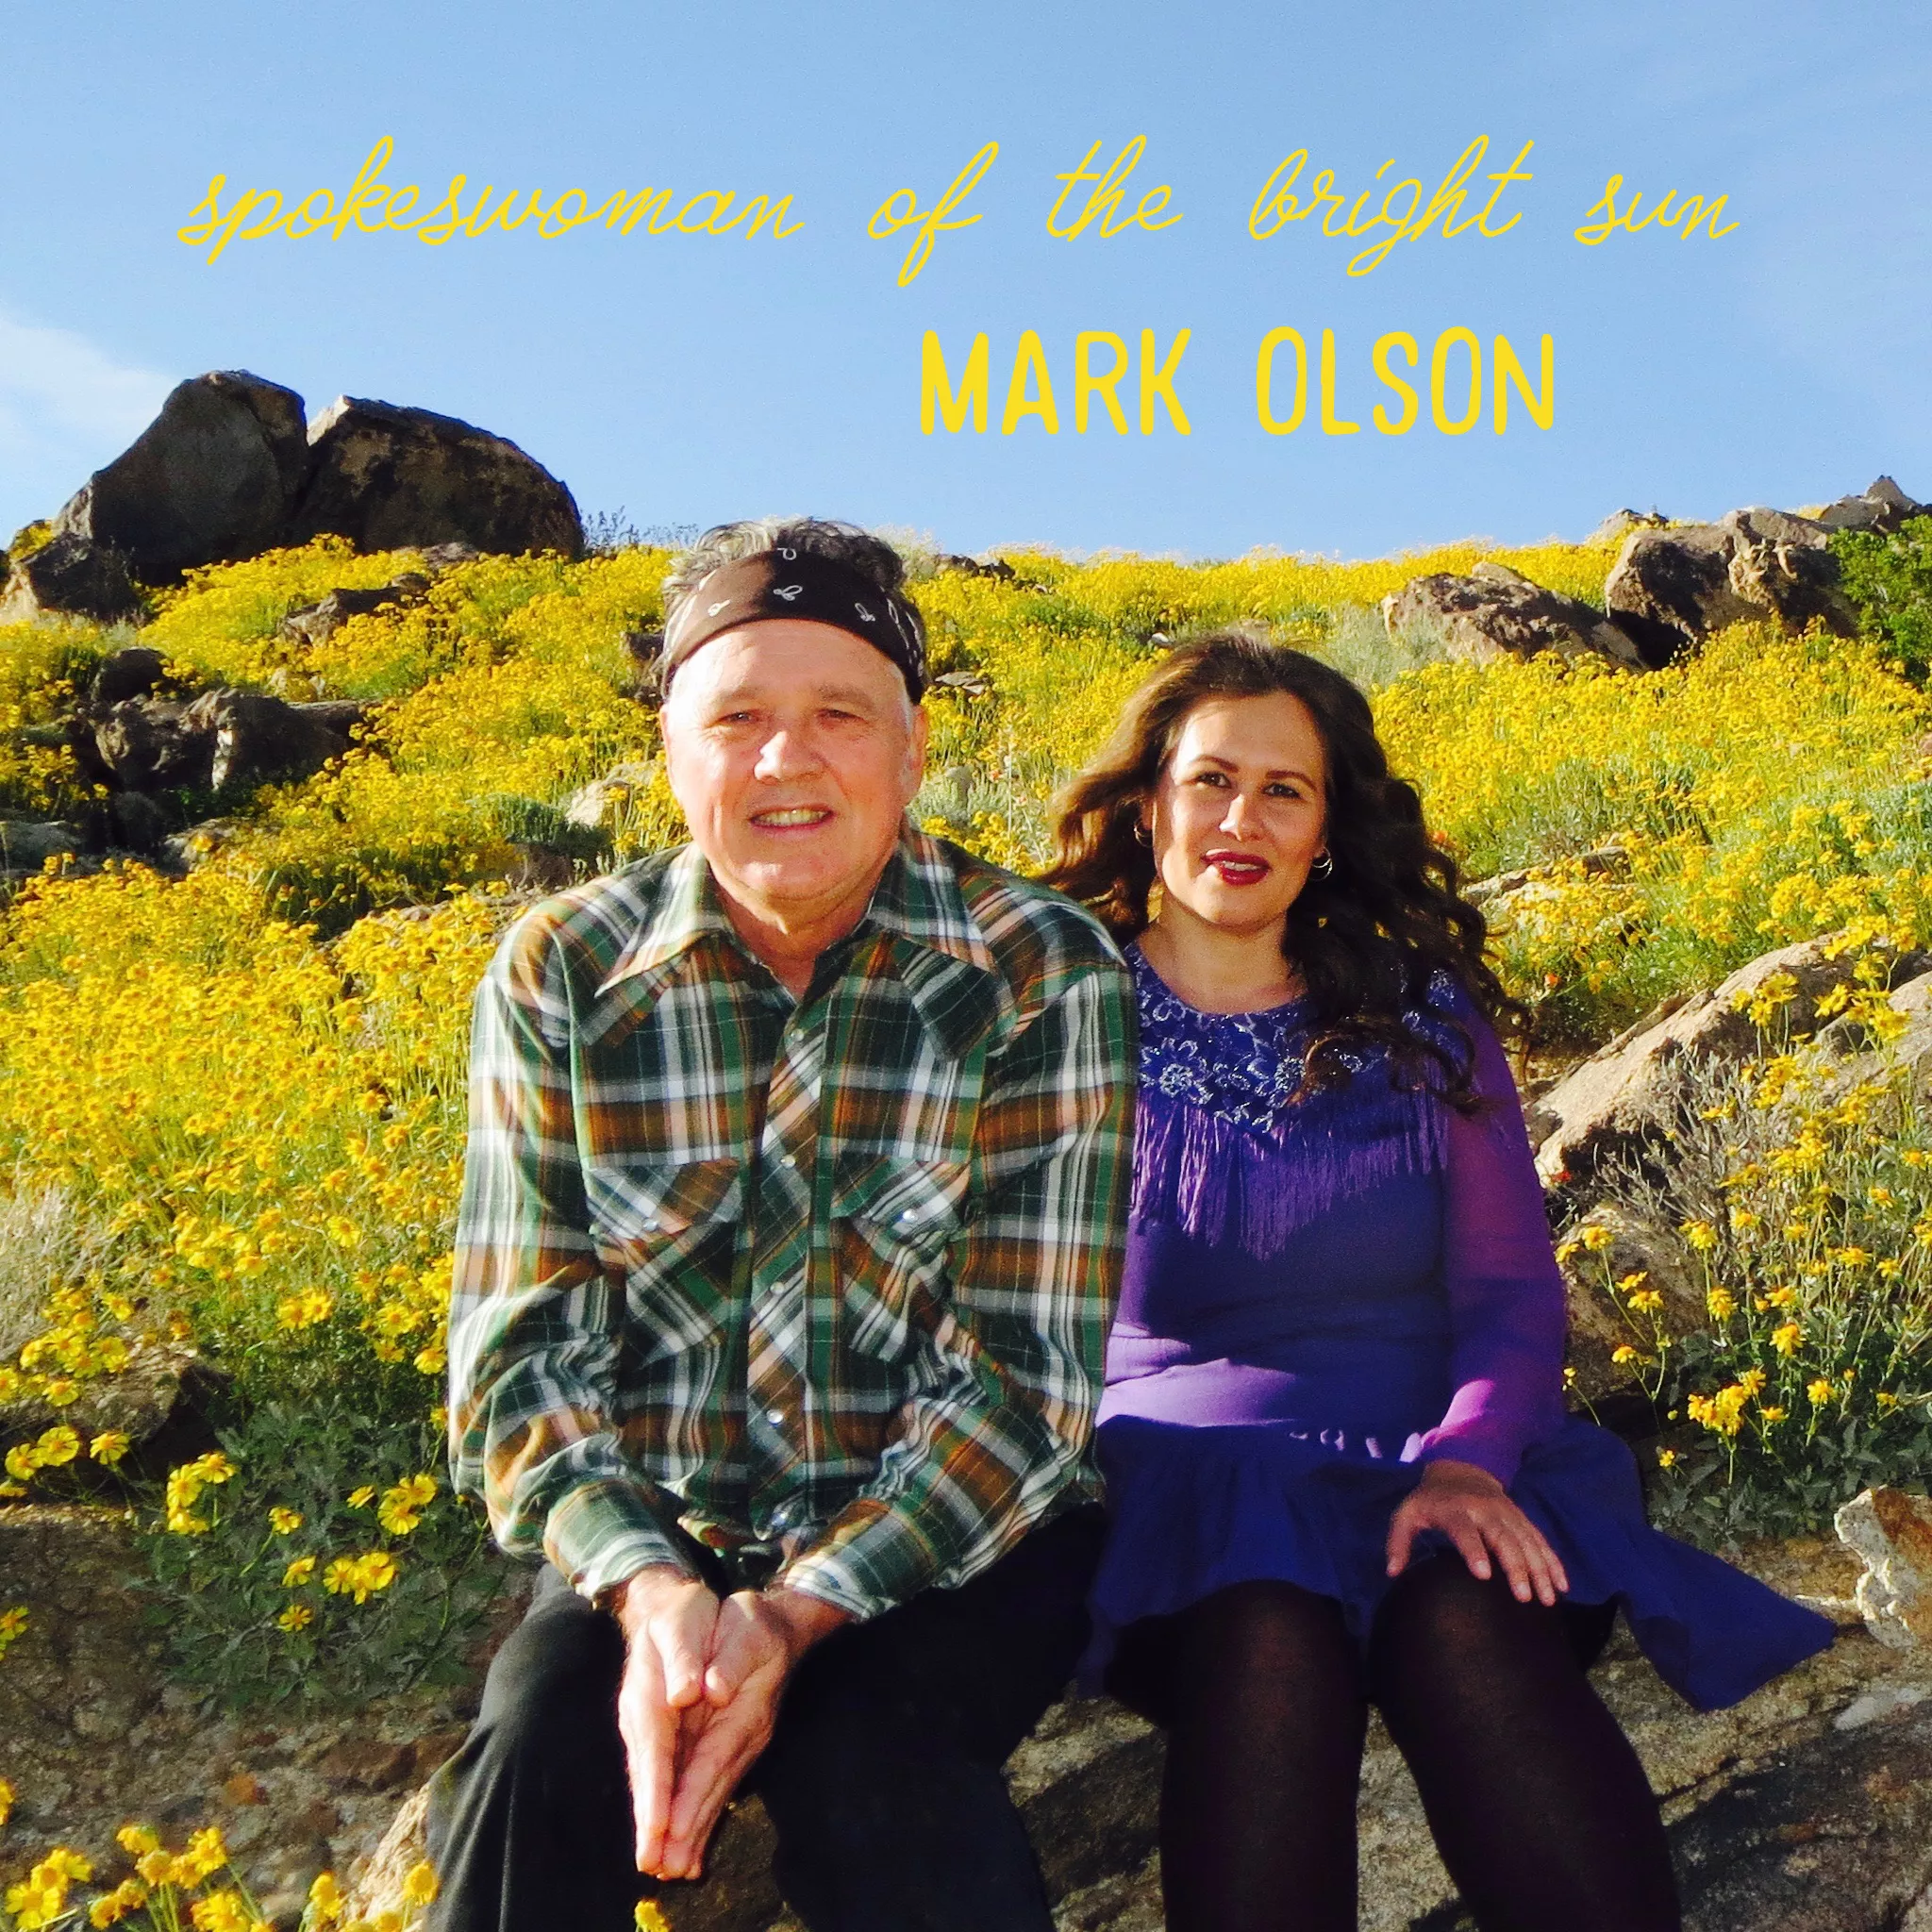 Spokeswoman Of The Bright Sun - Mark Olson